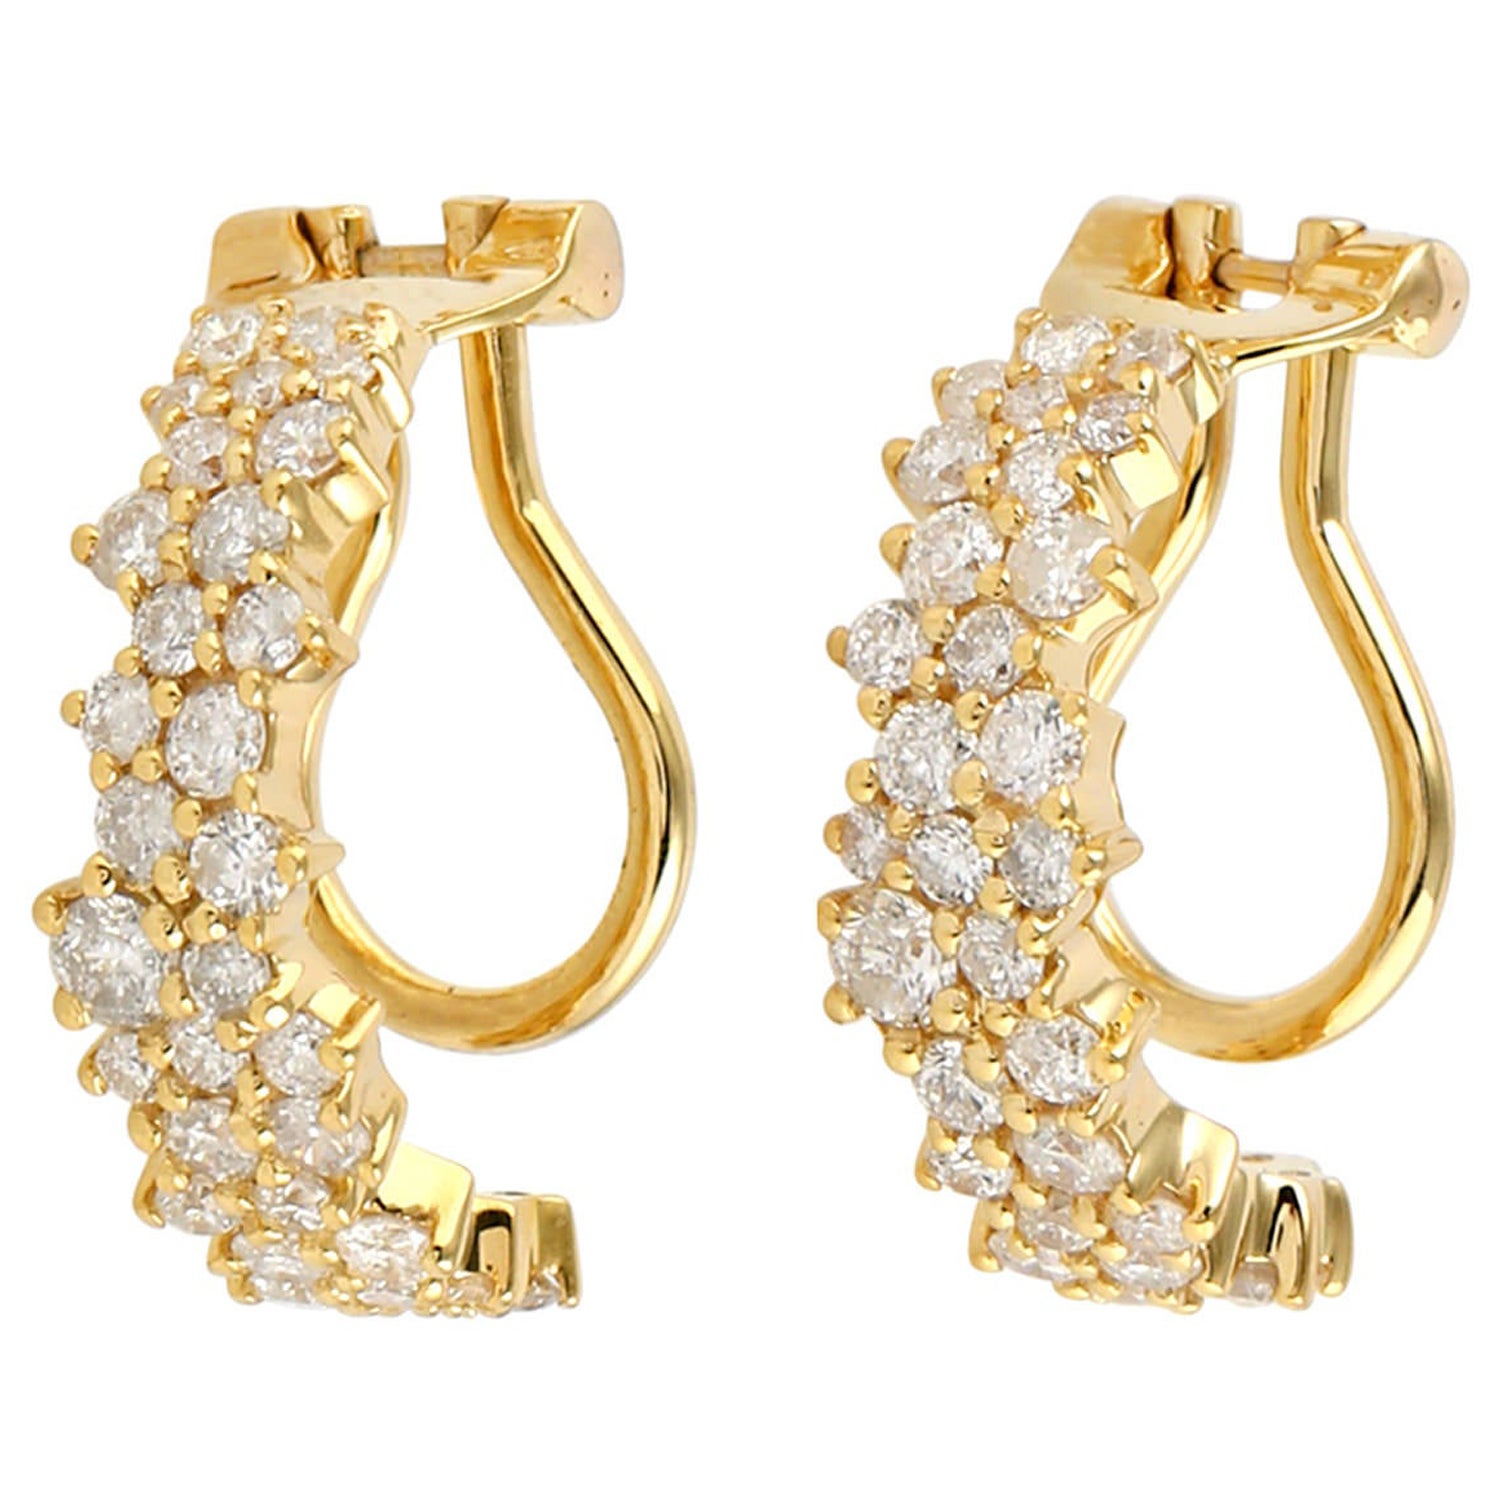 1.28 Carats Diamond 14 Karat Gold Cluster Earrings